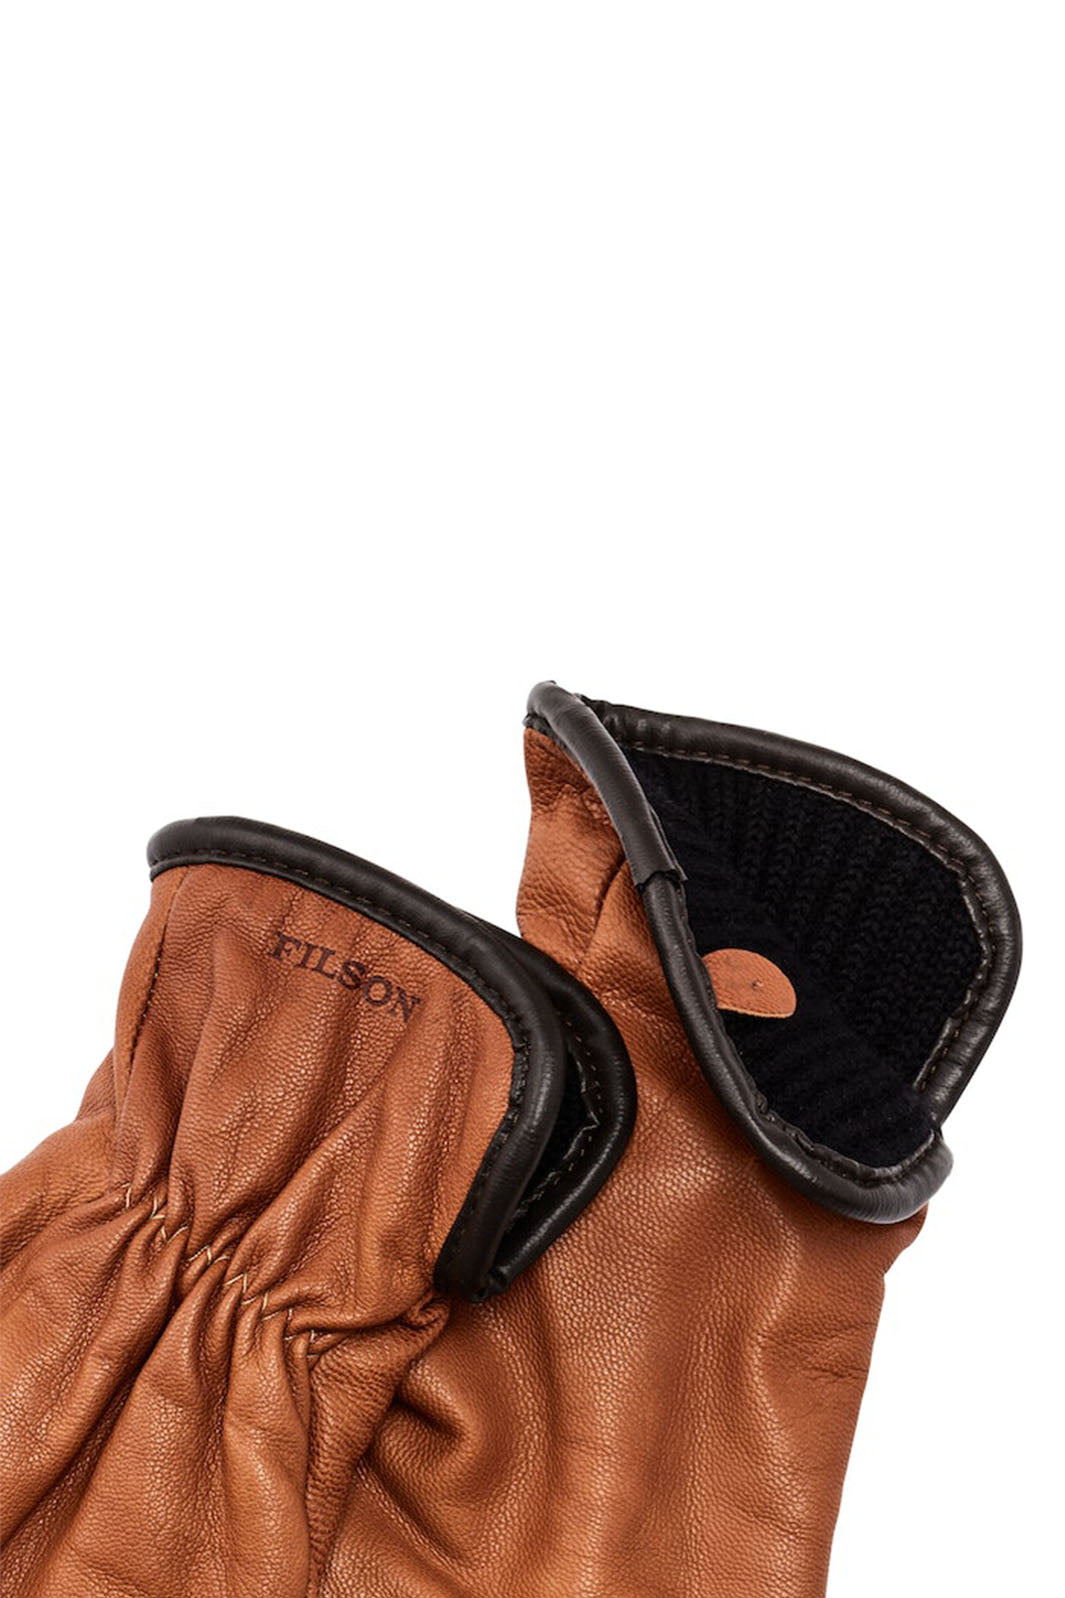 Original Lined Goatskin Gloves